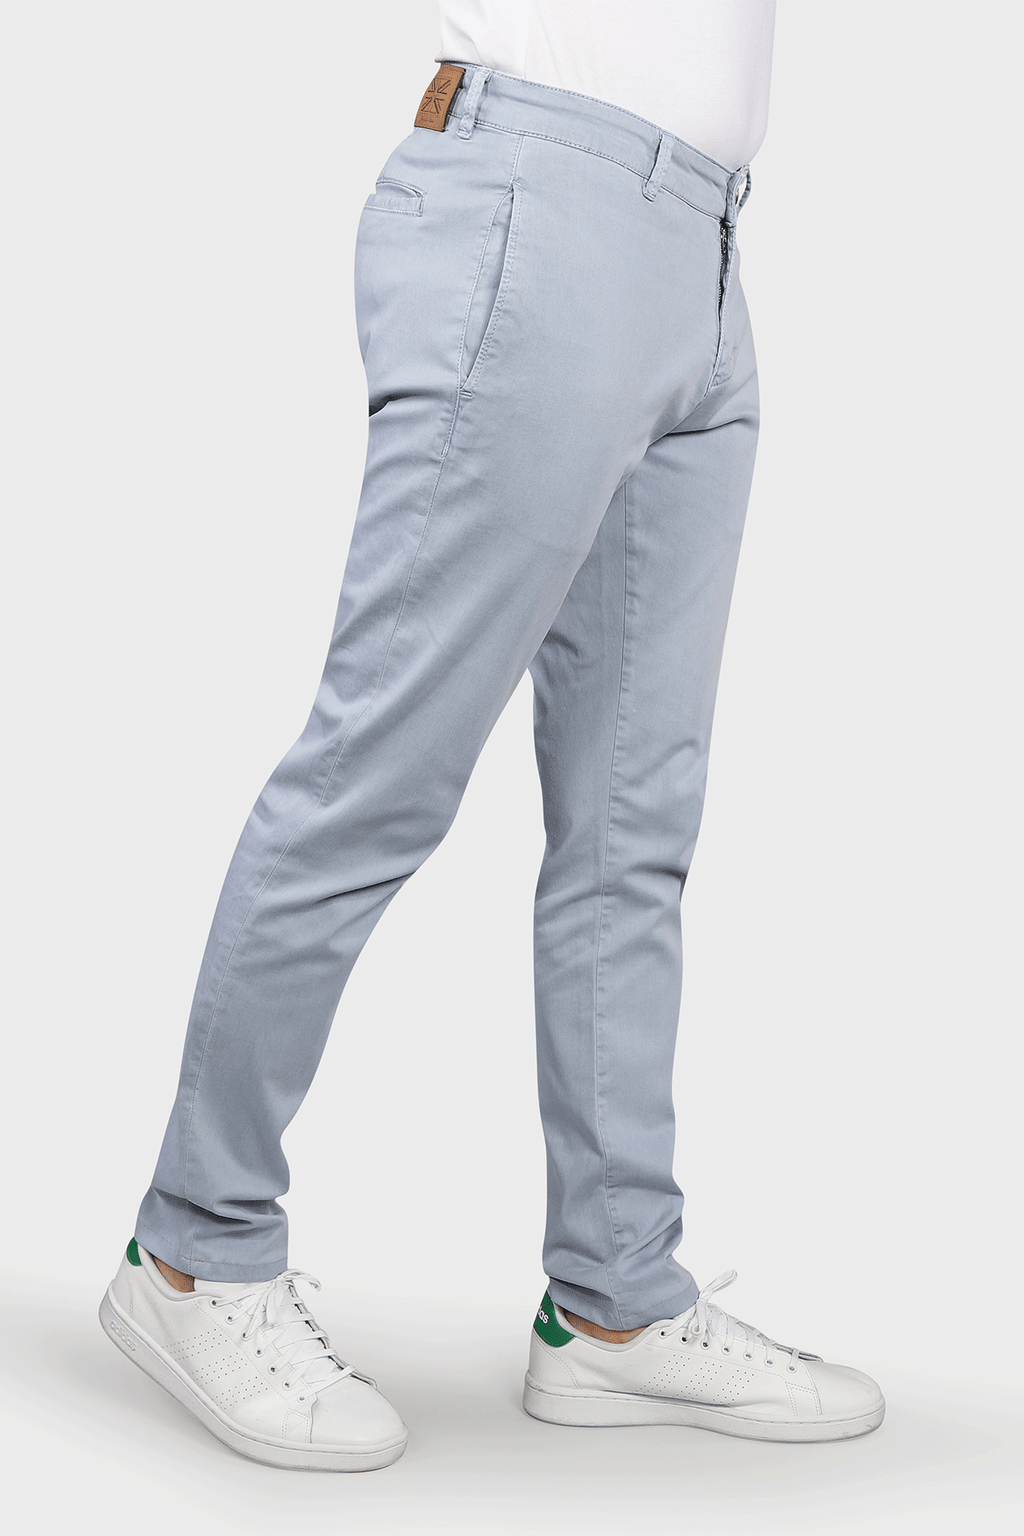 Flat Front Stretch Pants in Aqua - 7 Downie St.®